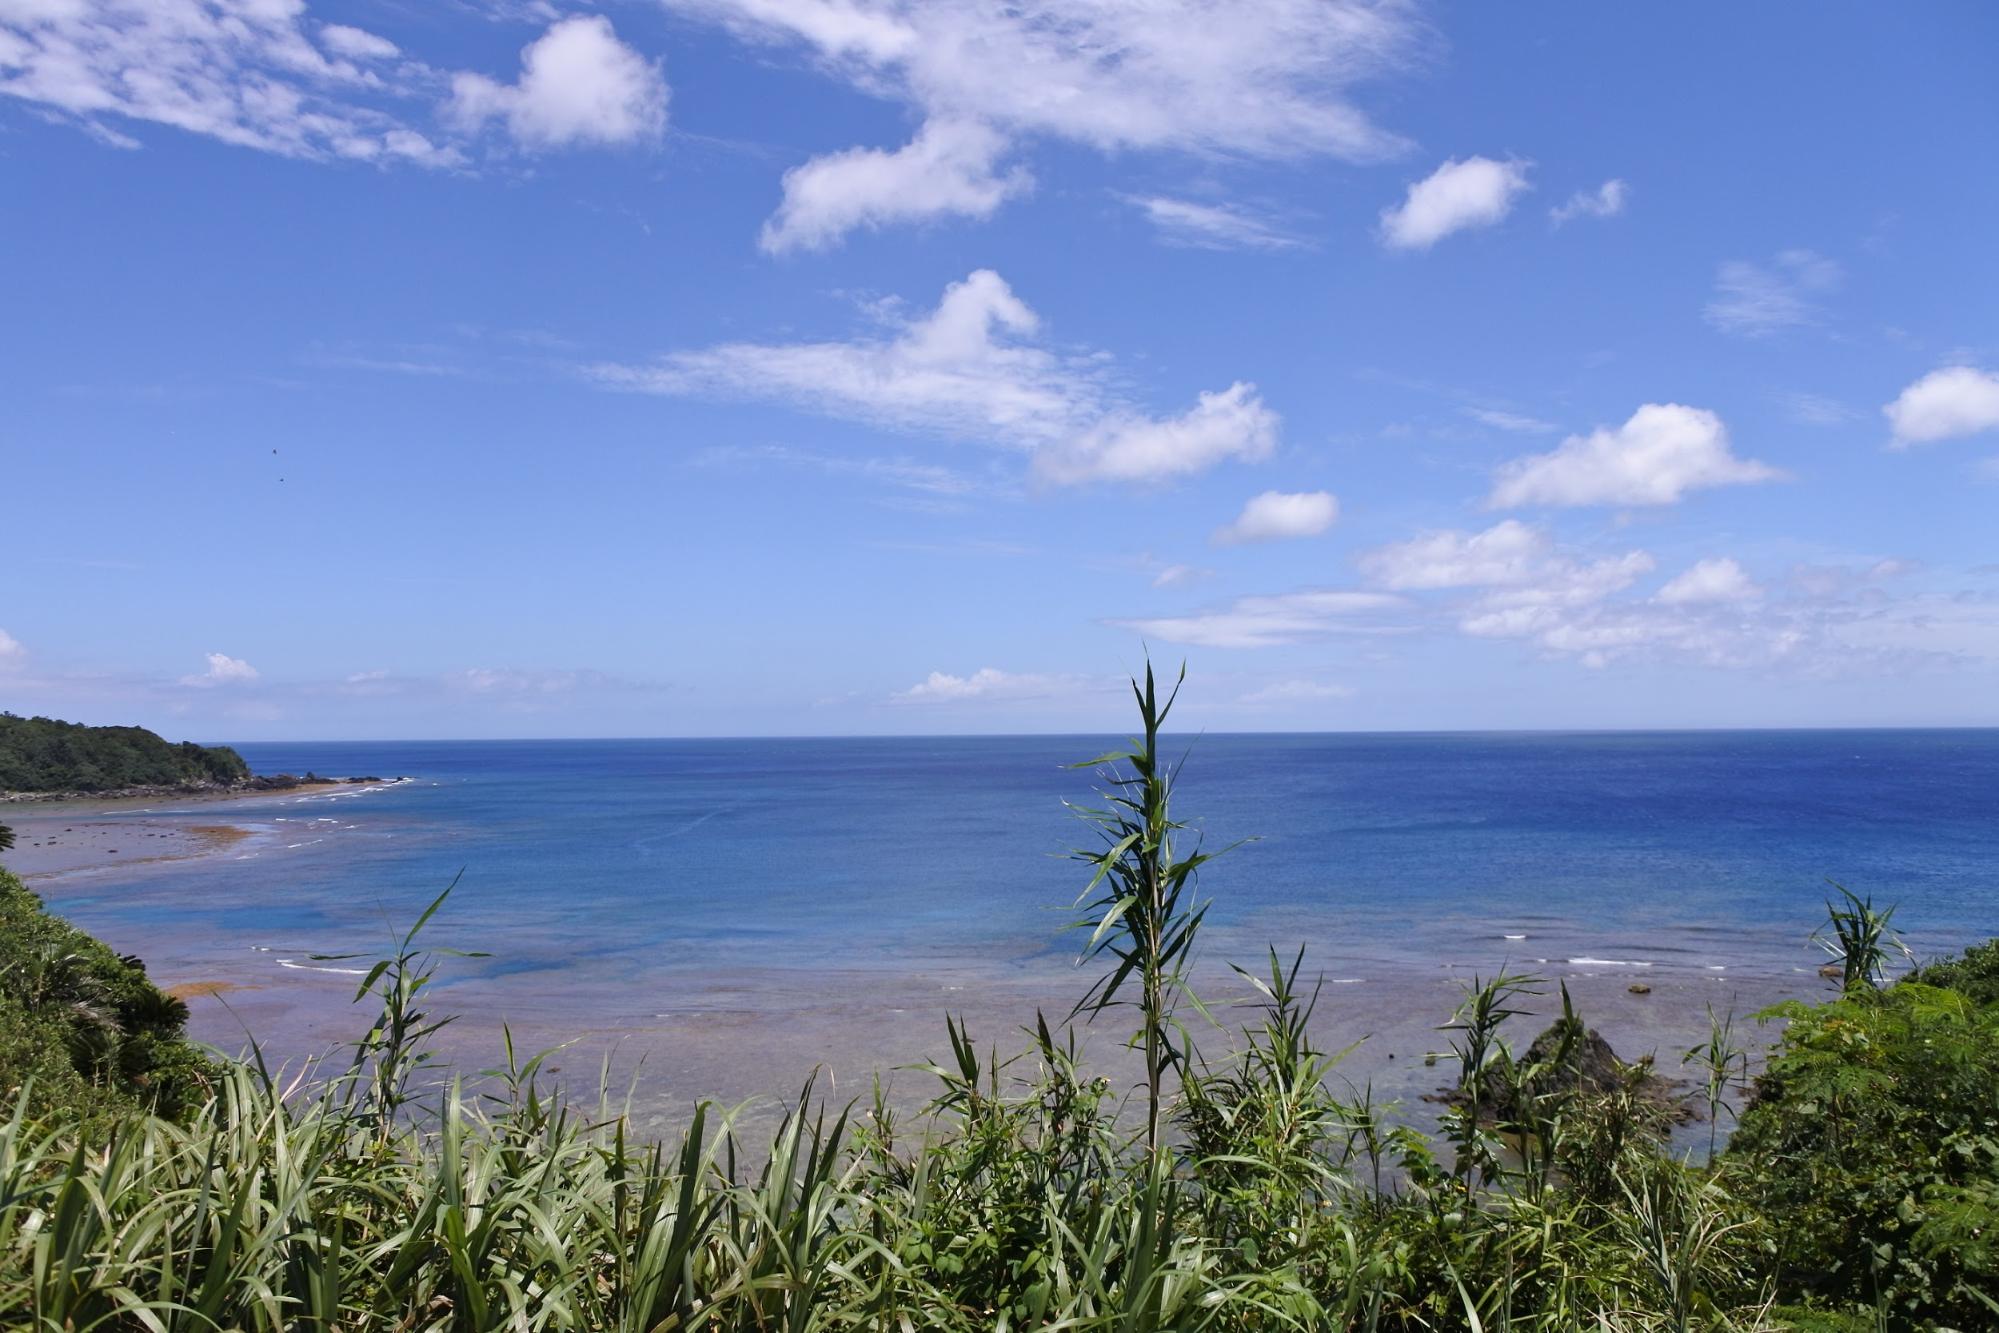 Landscape from Okinawa island | Photo by Masaya Morita